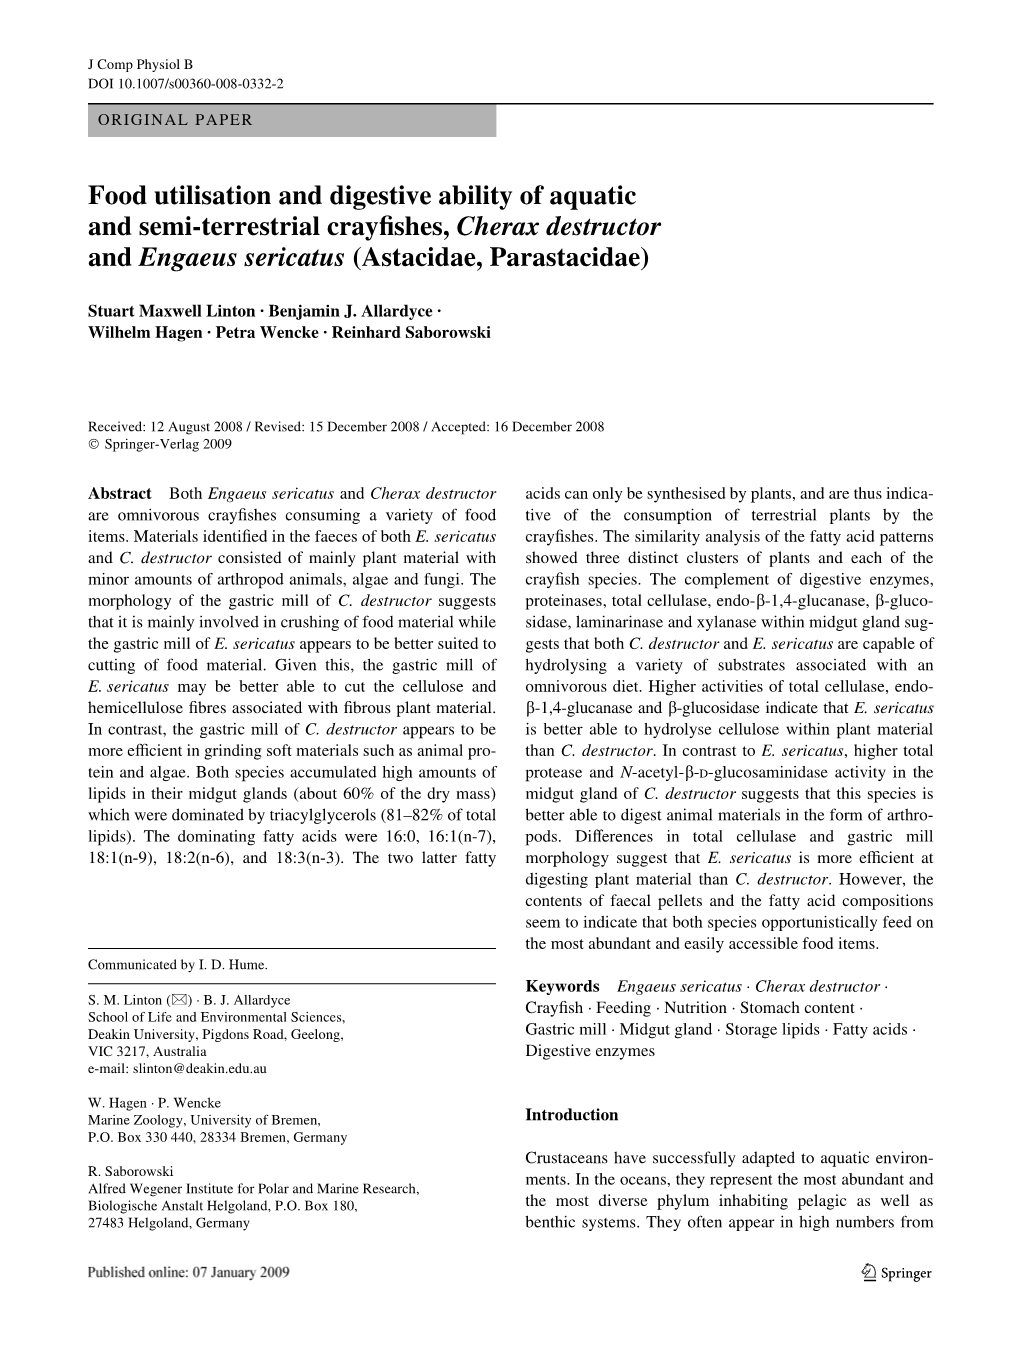 Food Utilisation and Digestive Ability of Aquatic and Semi-Terrestrial Craywshes, Cherax Destructor and Engaeus Sericatus (Astacidae, Parastacidae)